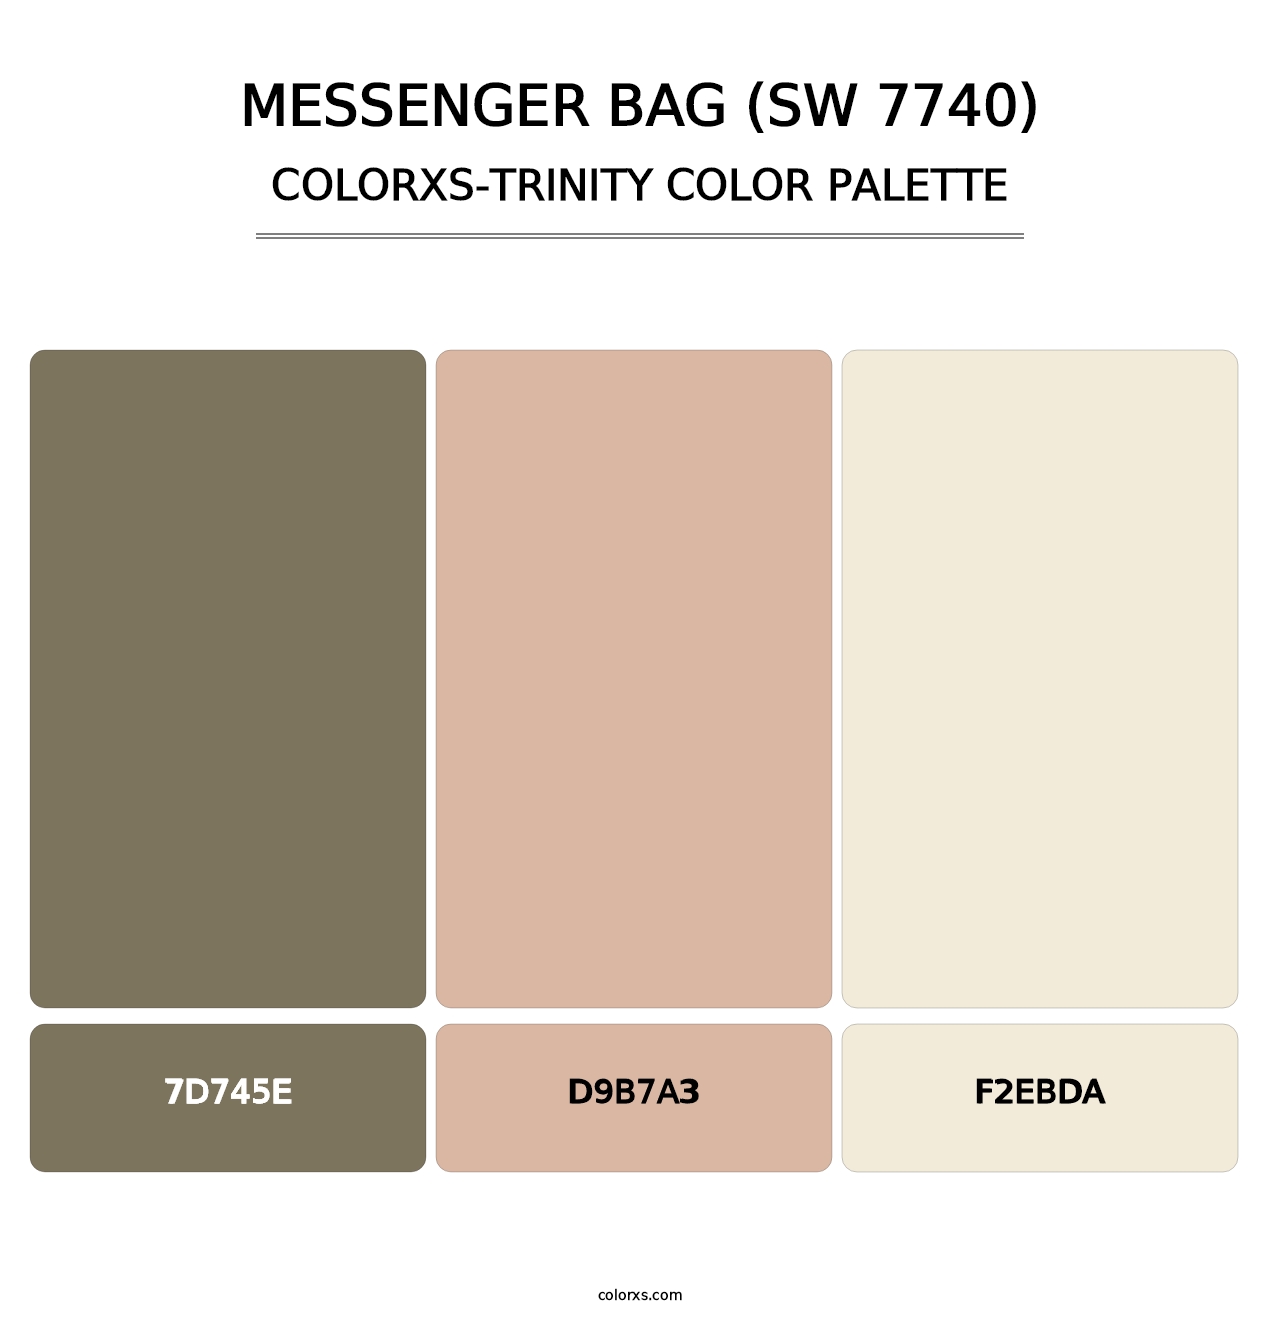 Messenger Bag (SW 7740) - Colorxs Trinity Palette